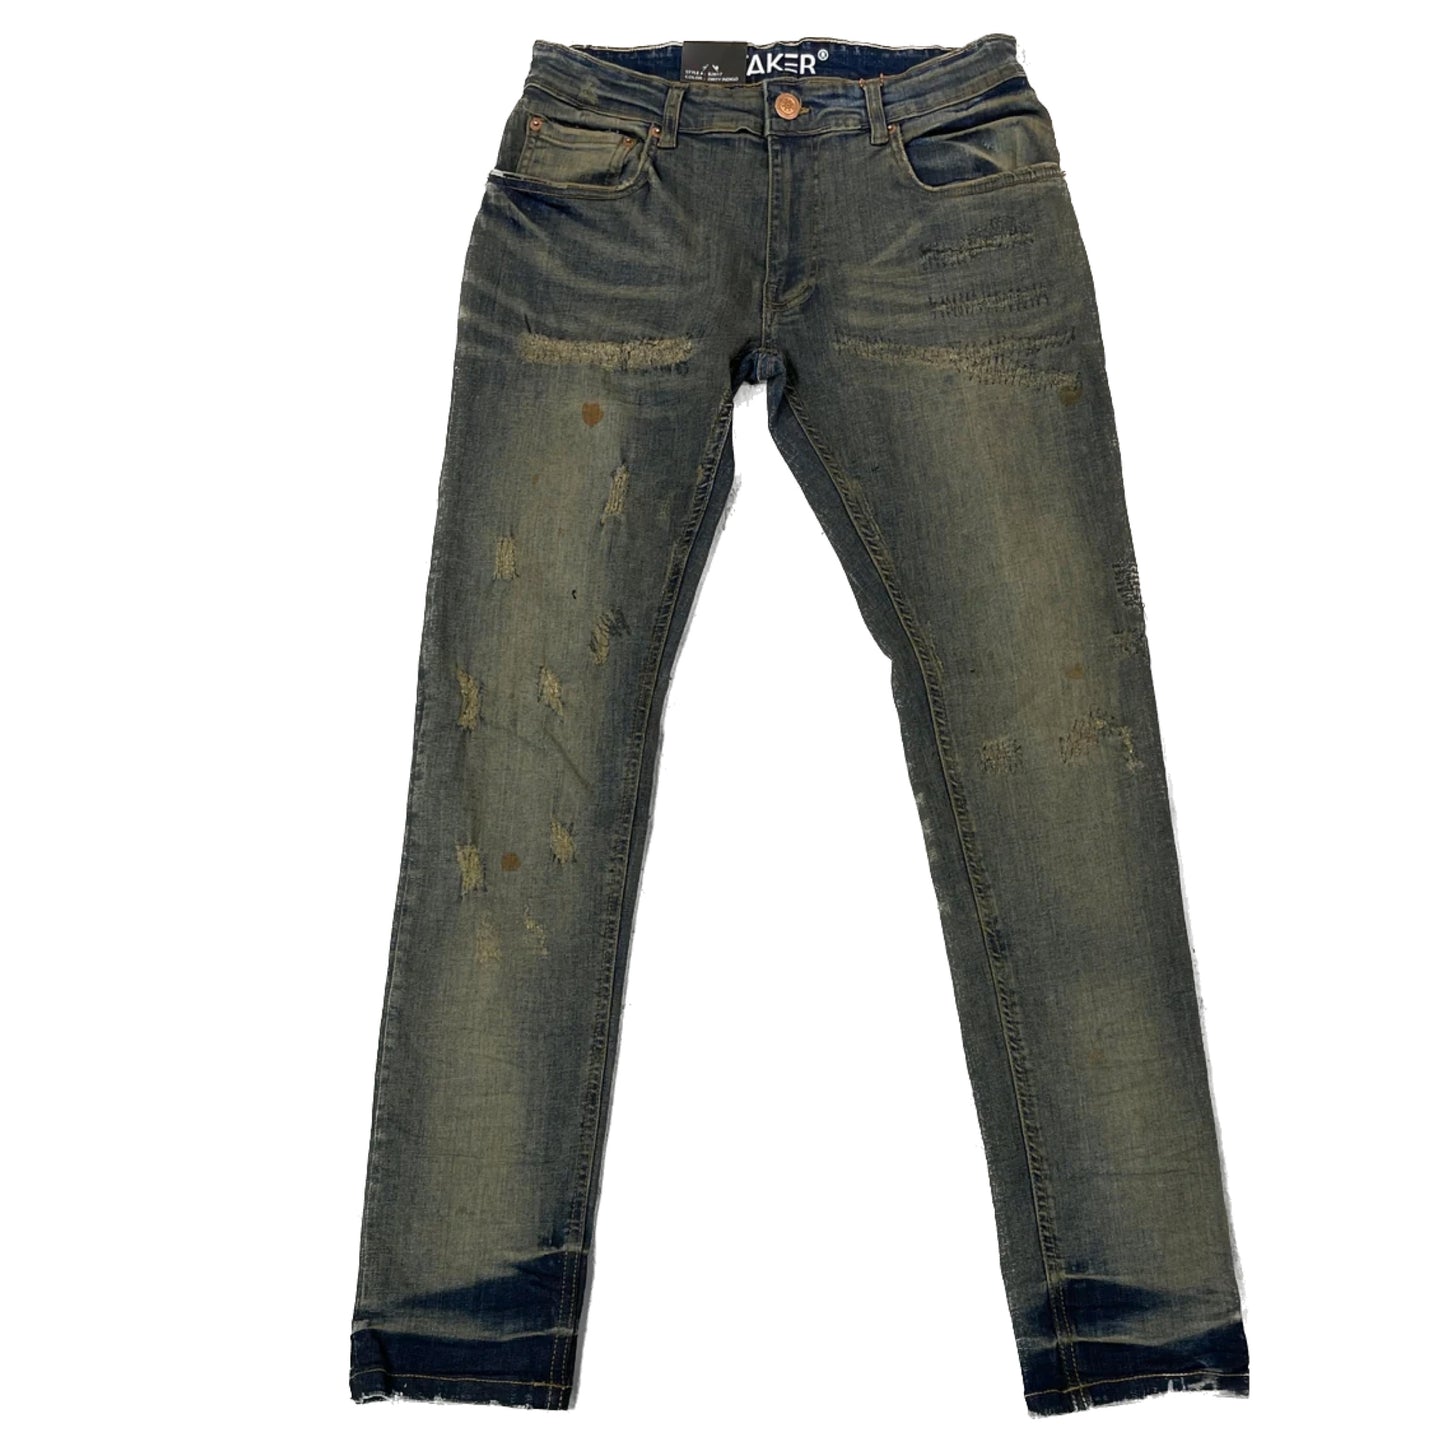 Rust Stain Paint Splatter Jeans (Men)